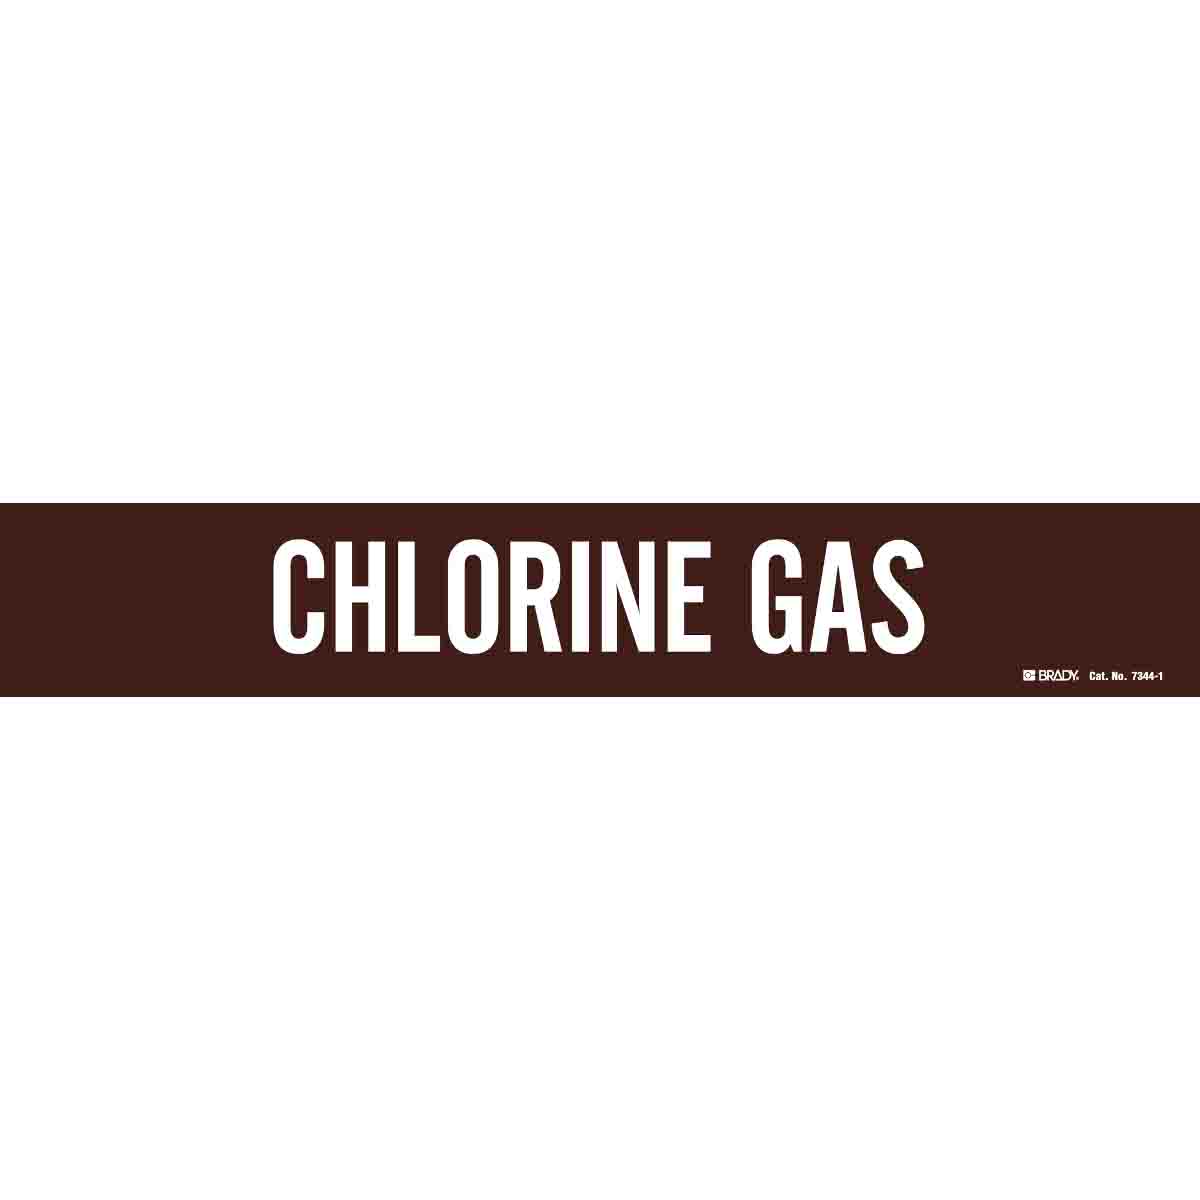 CHLORINE GAS WHITE / BROWN